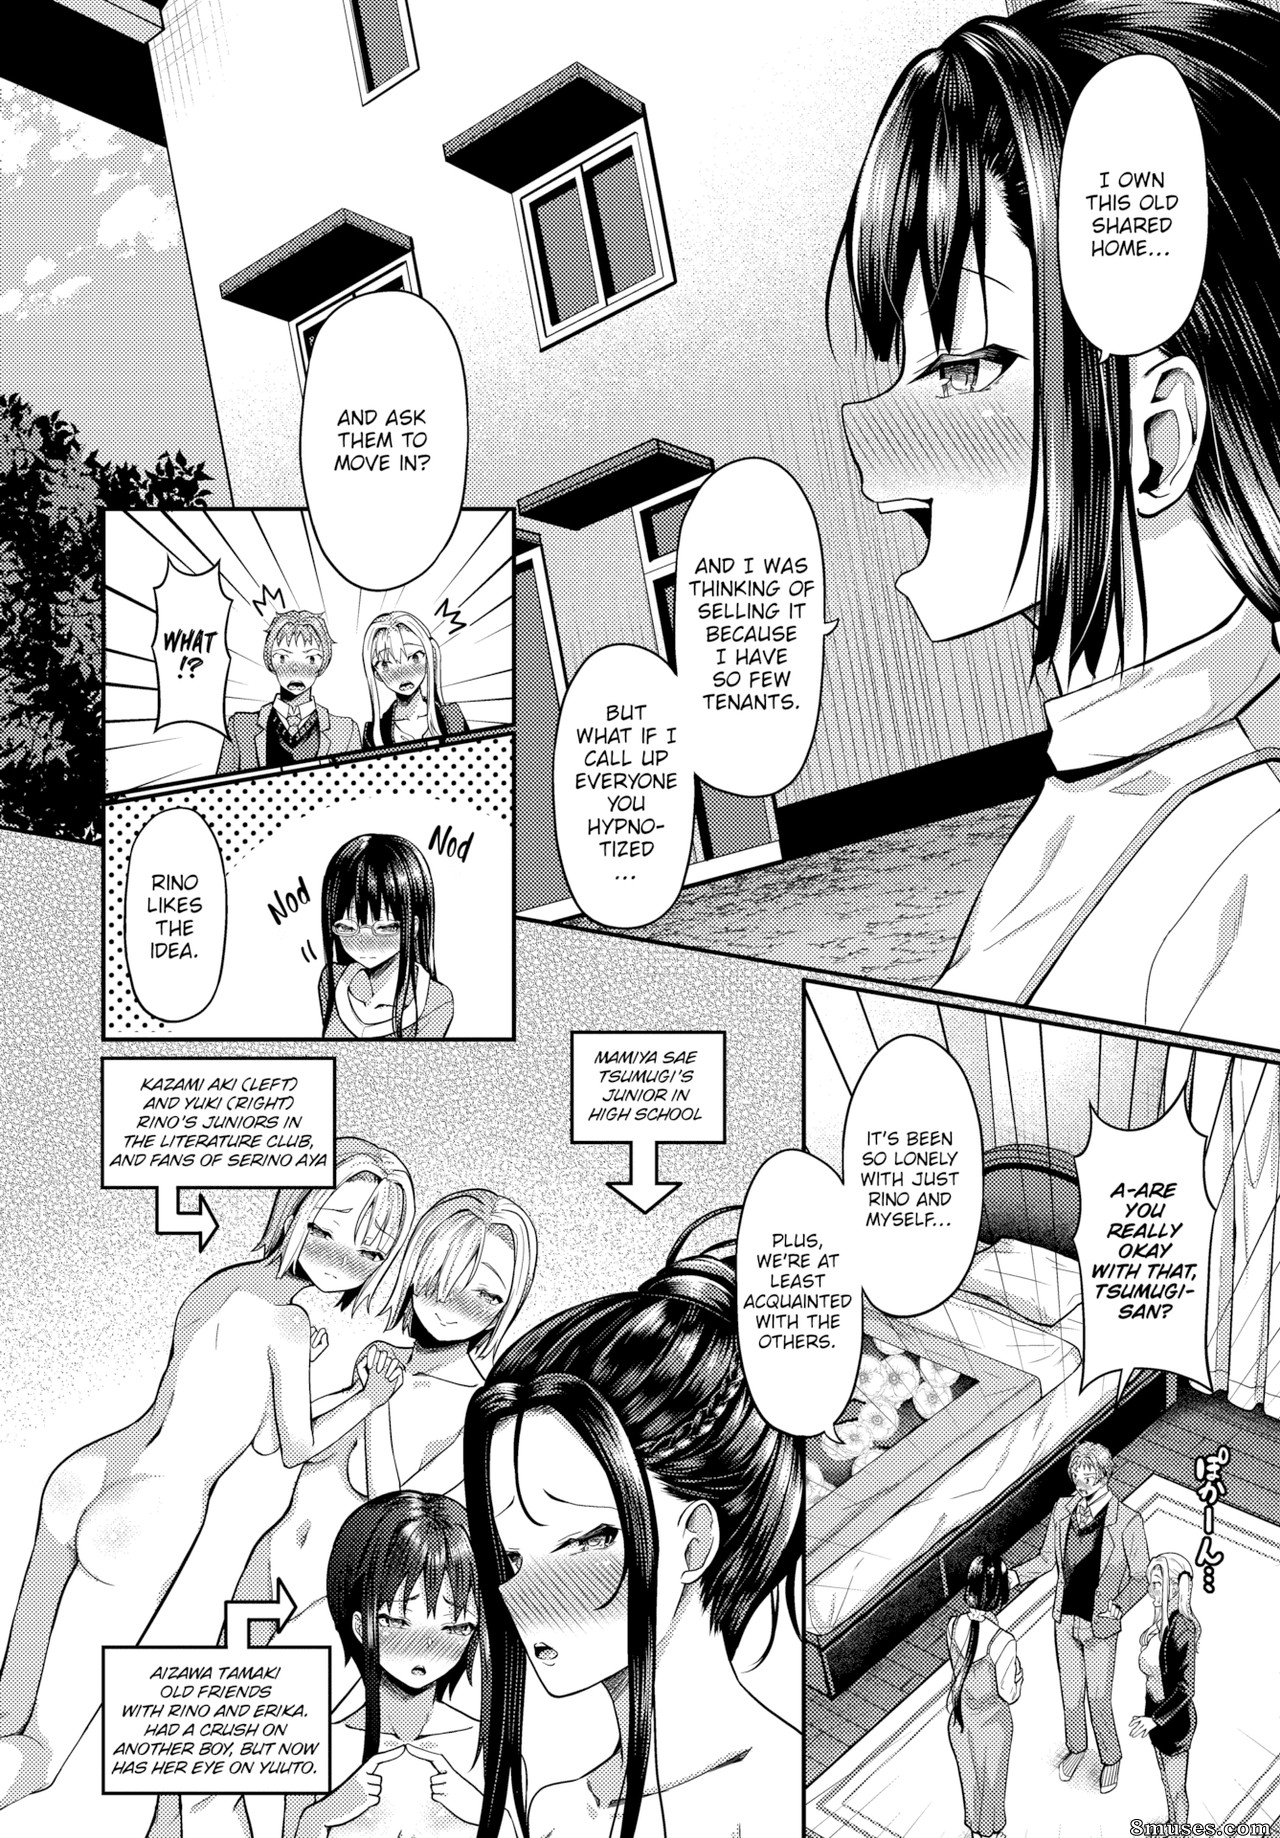 Page 5 Fakku-Comics/Hazakura-Satsuki/Hypnosis-App-Making-A-Good-Girl-Cum -on-My-Dick-Nonstop-Ch_12 8muses